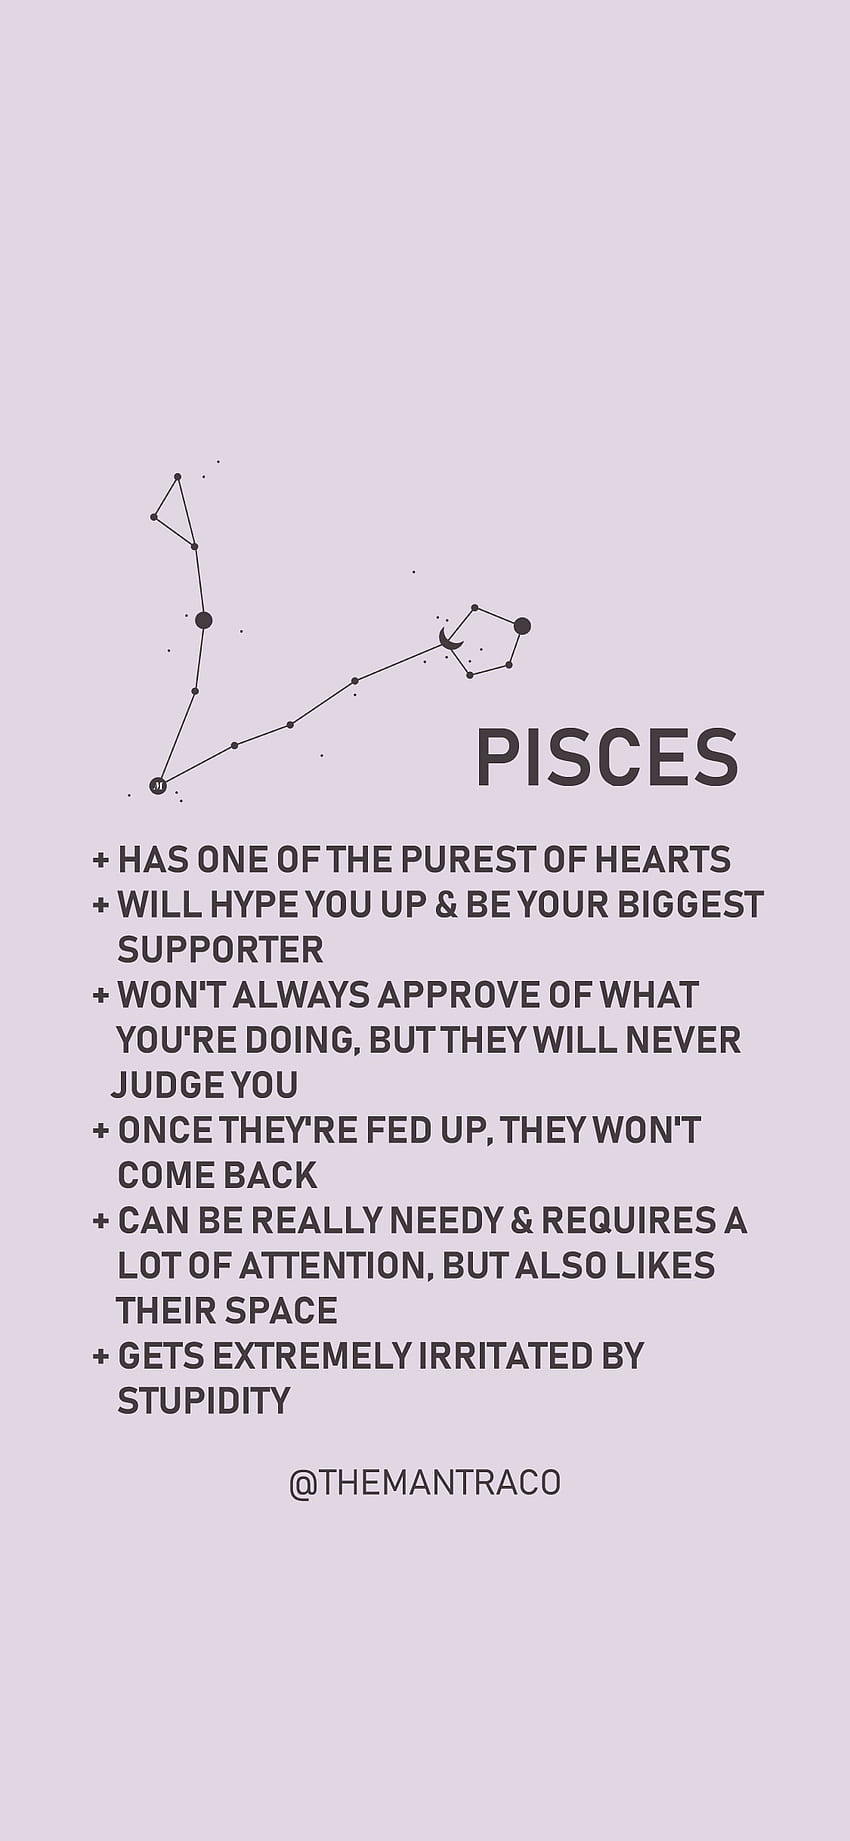 Pisces zodiac sign personality traits - Pisces